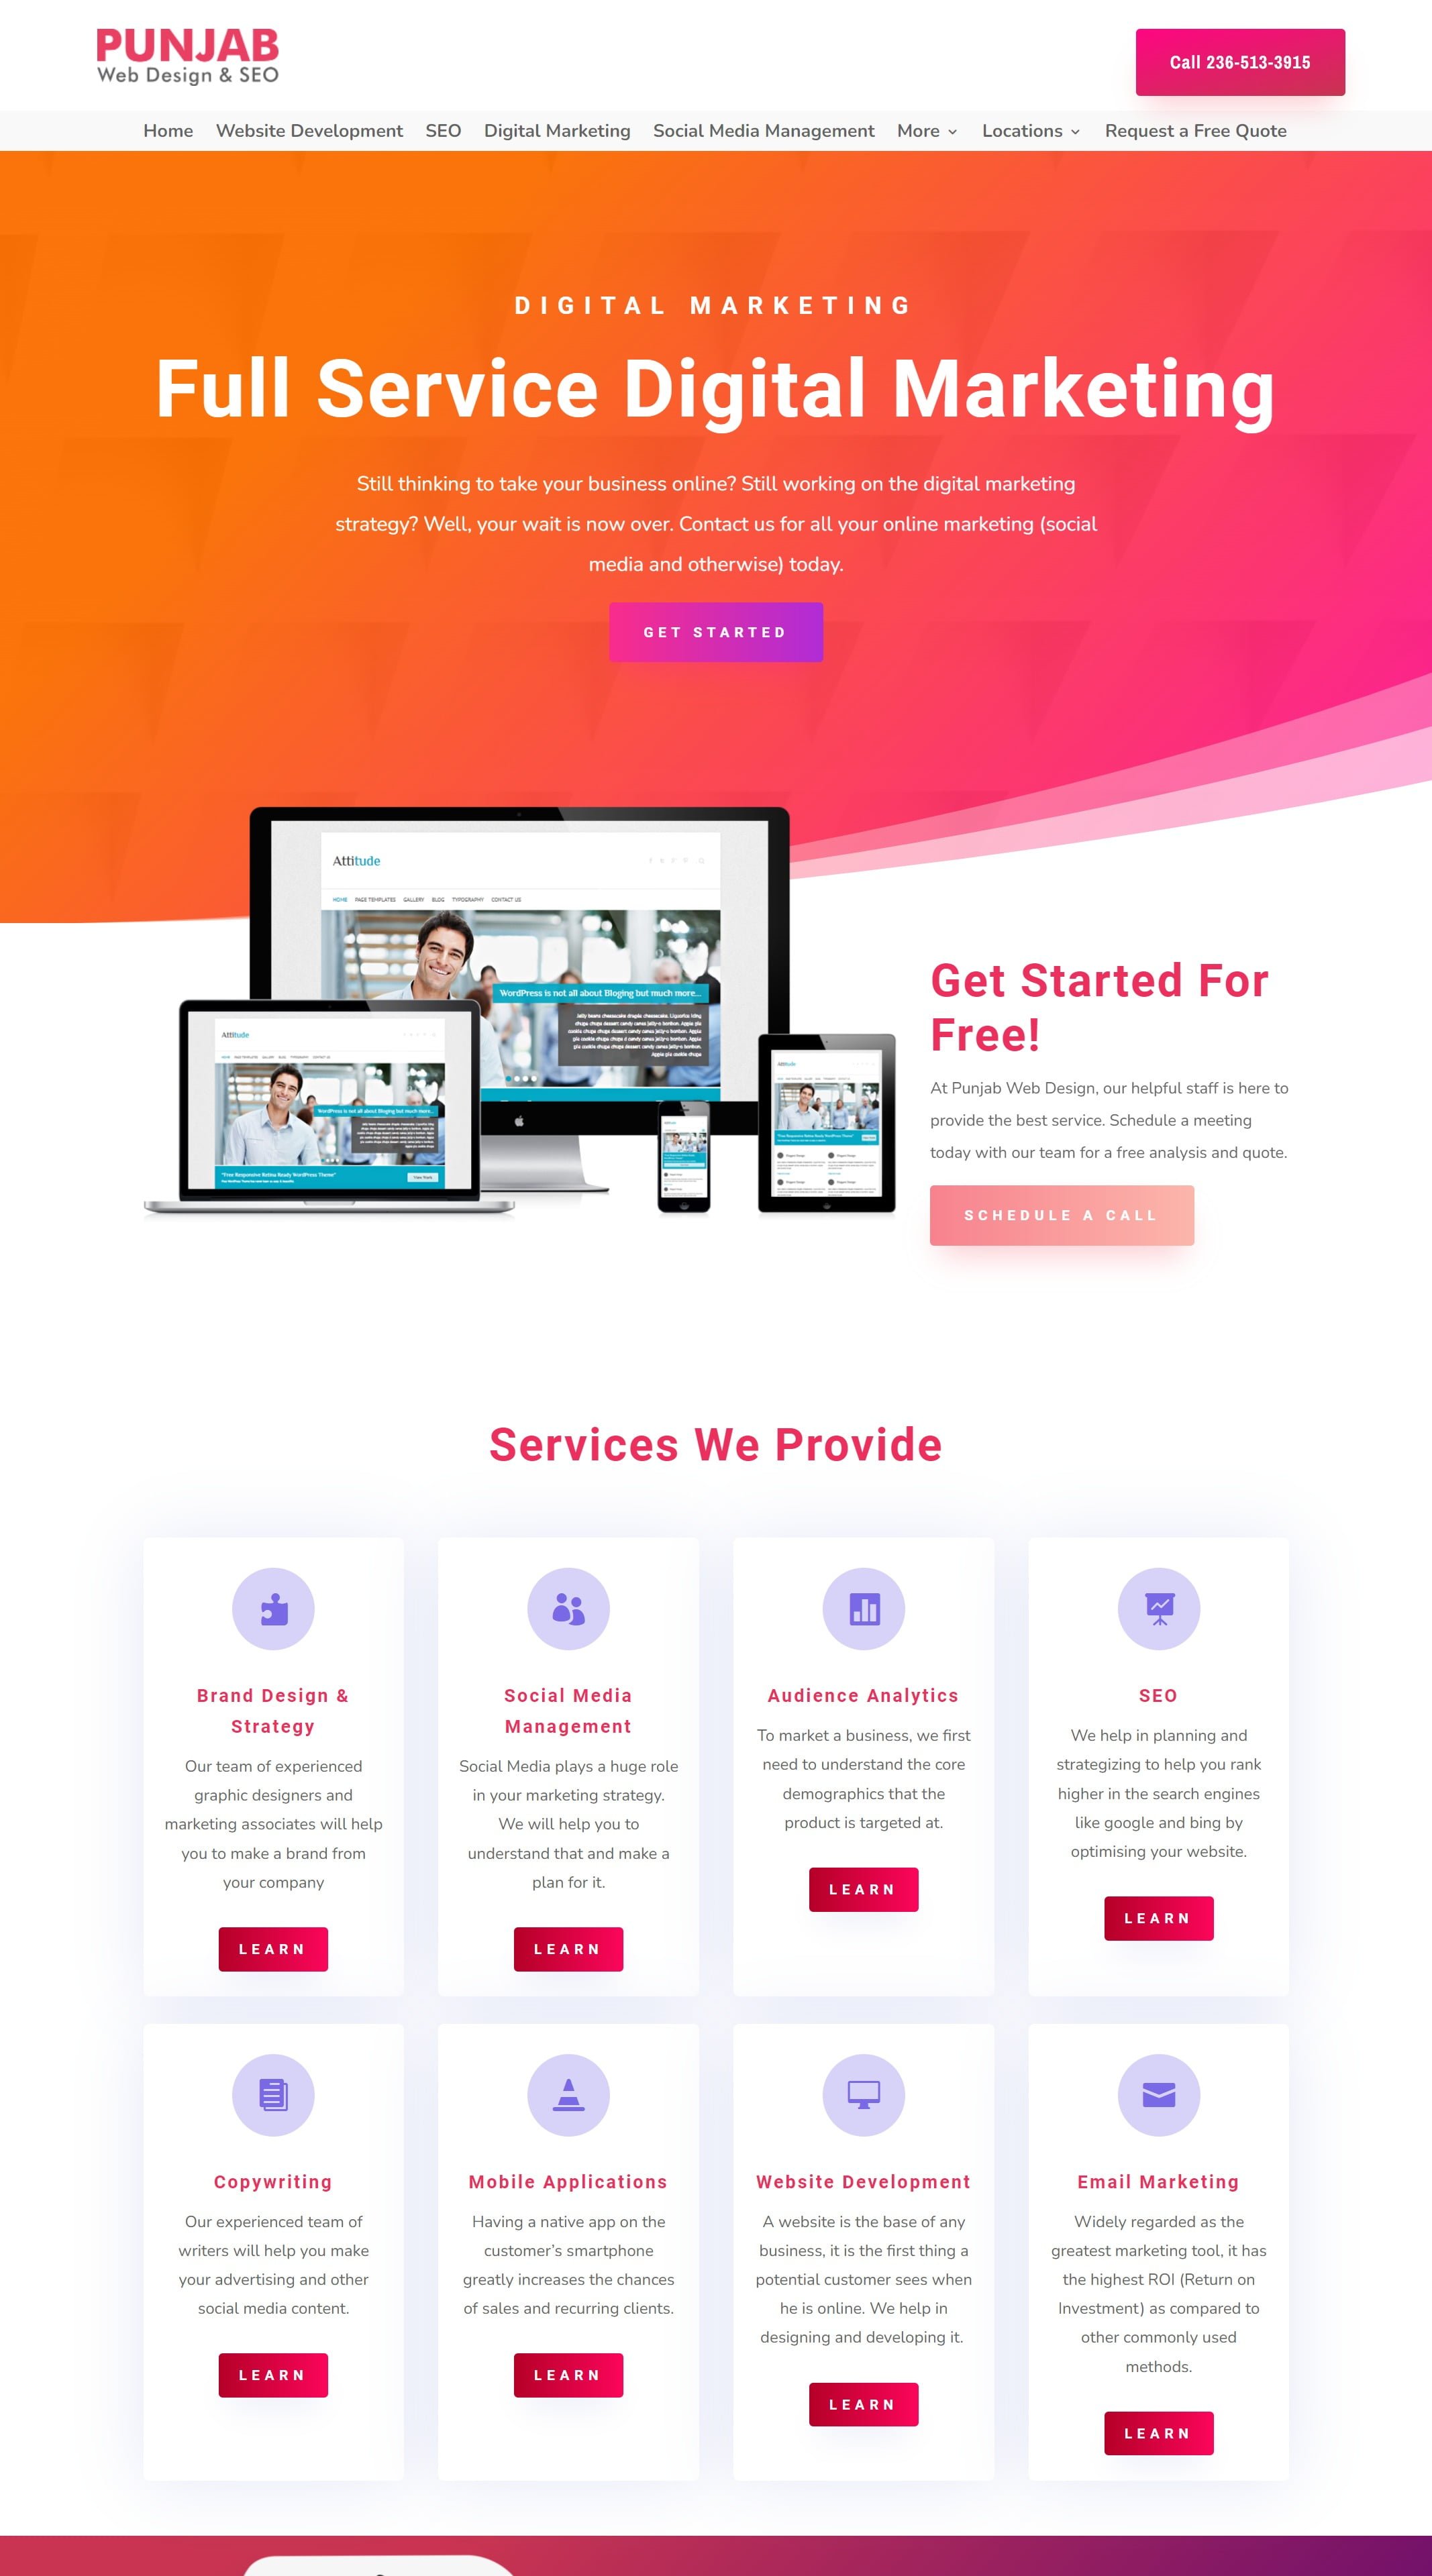 Punjab Web Design Studio - Web Design Services